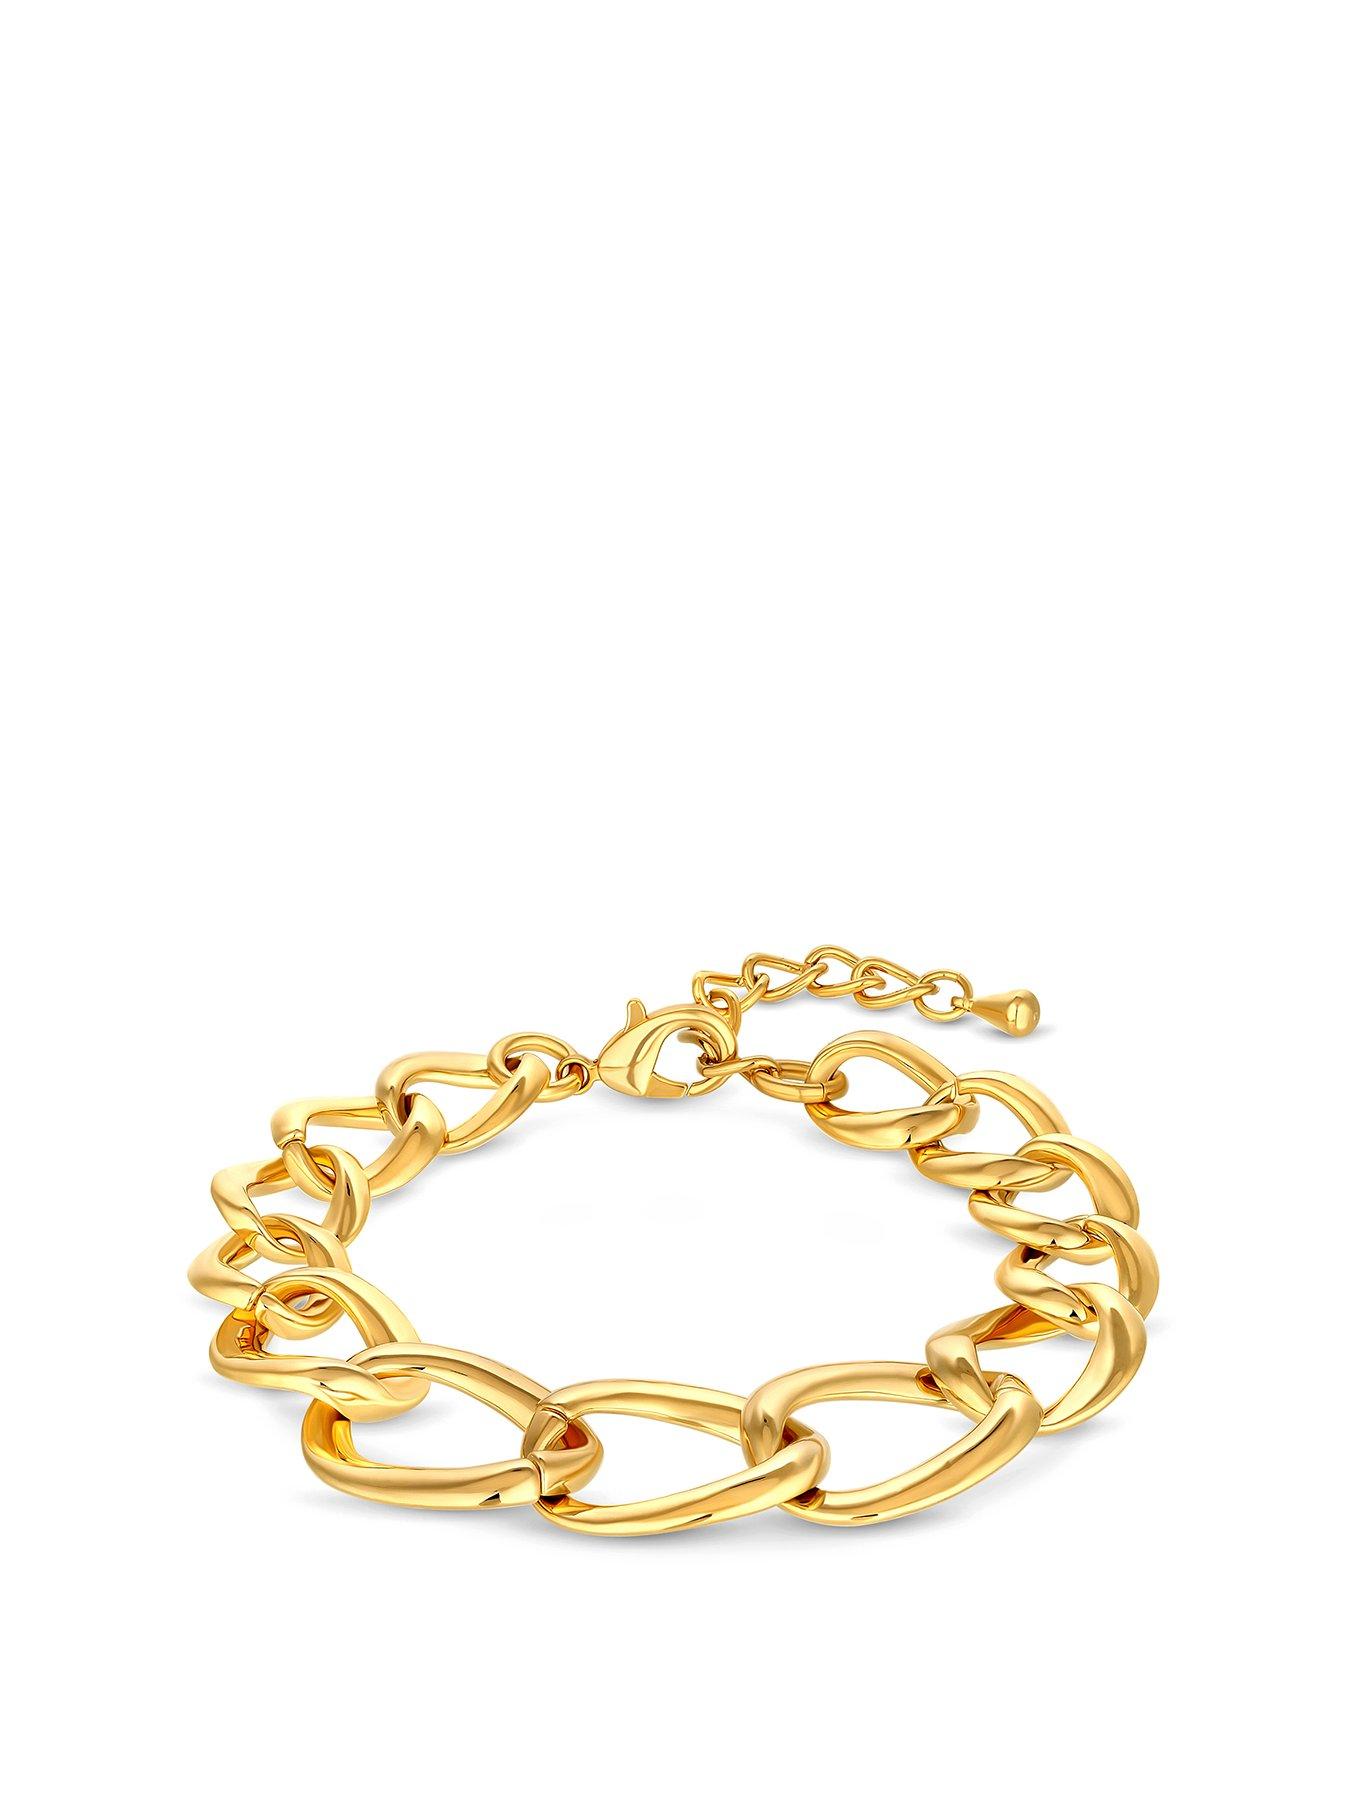 The Princess Kate Chunky Crystal Encrusted Chain Link Bracelet